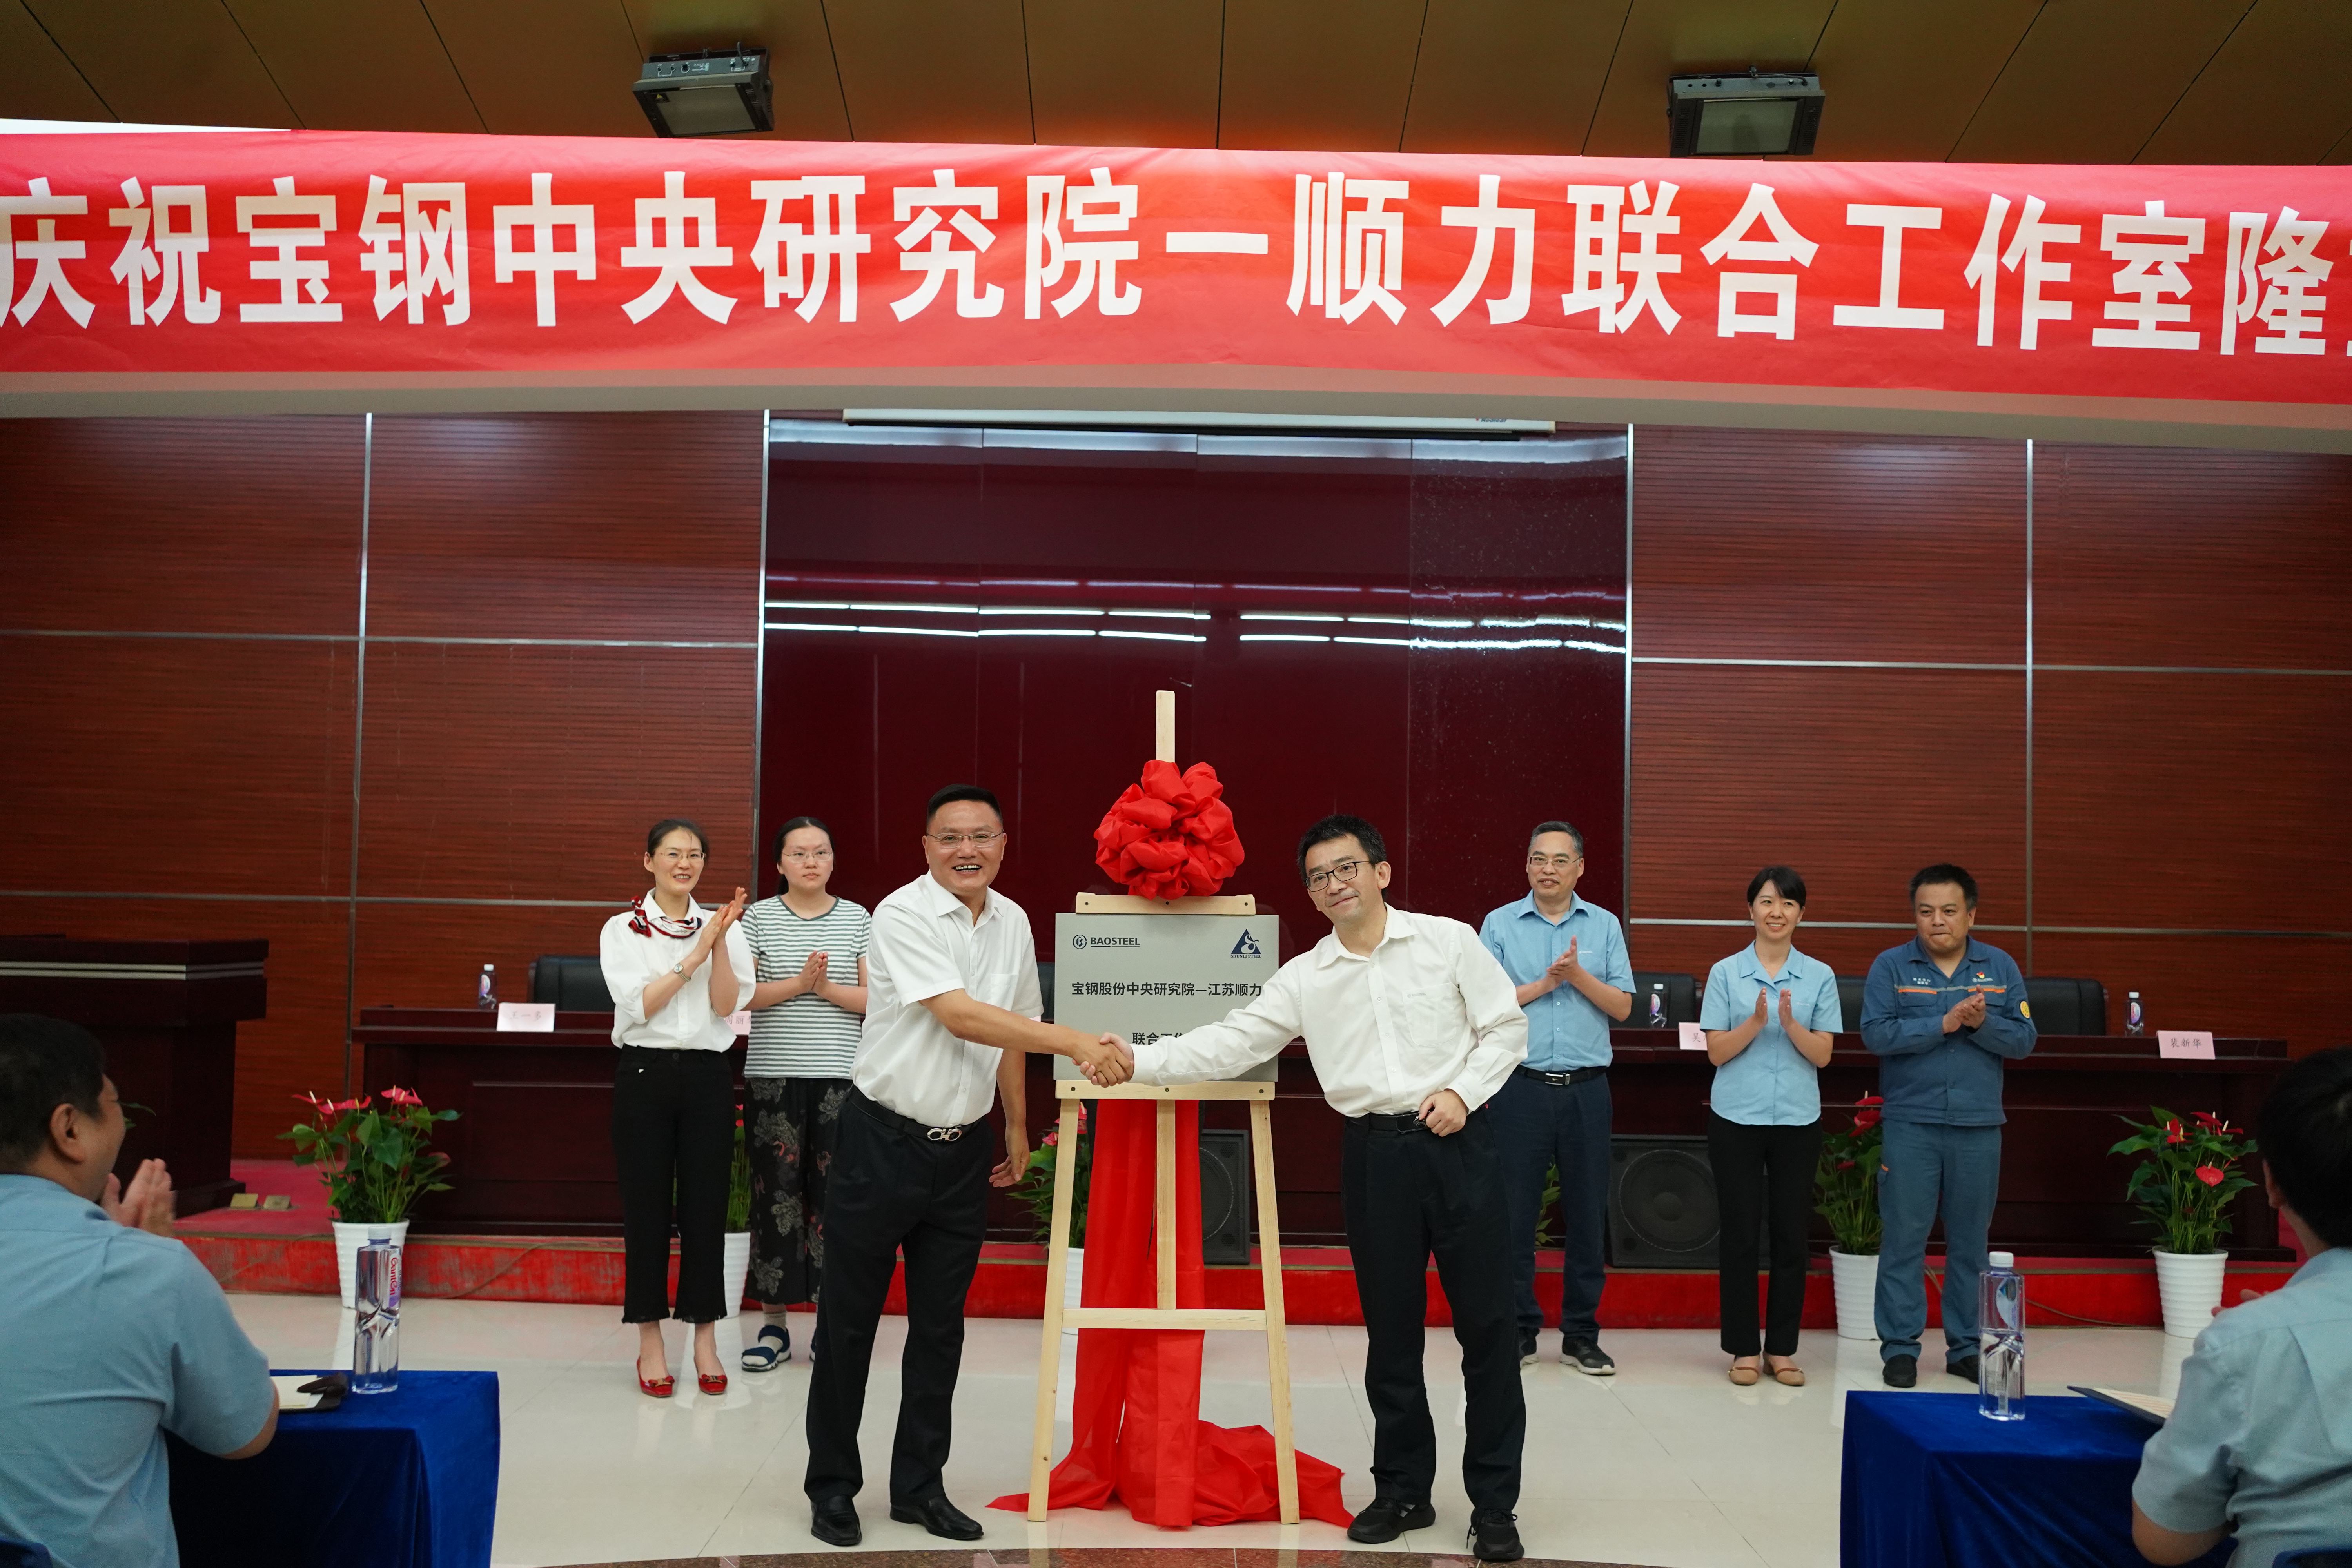 Baowu Group Baosteel Central Research Institute-Shunli Joint Studio foi grandiosamente revelado no SHUNLI Steel Group